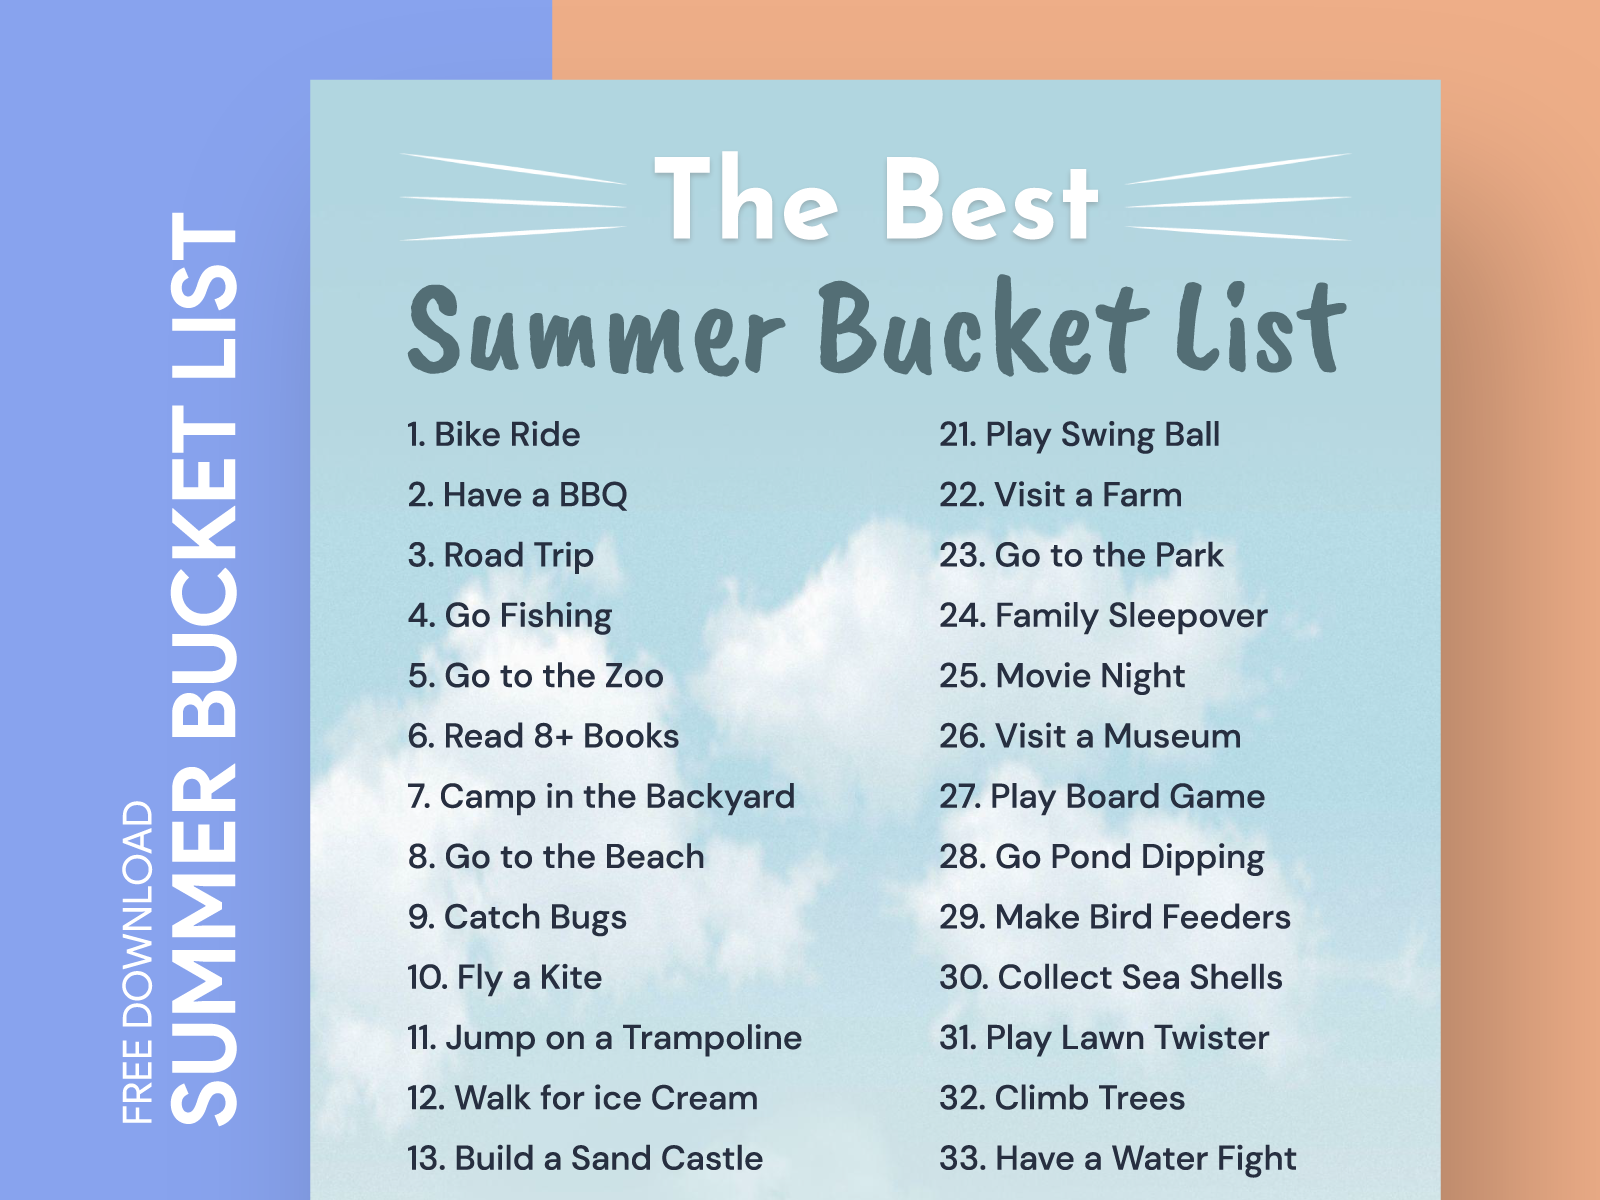 Summer Bucket List Printable, Summer Break Bucket List Template, Summer  Activities Checklist, Summer to Do List, Editable, Instant Download 